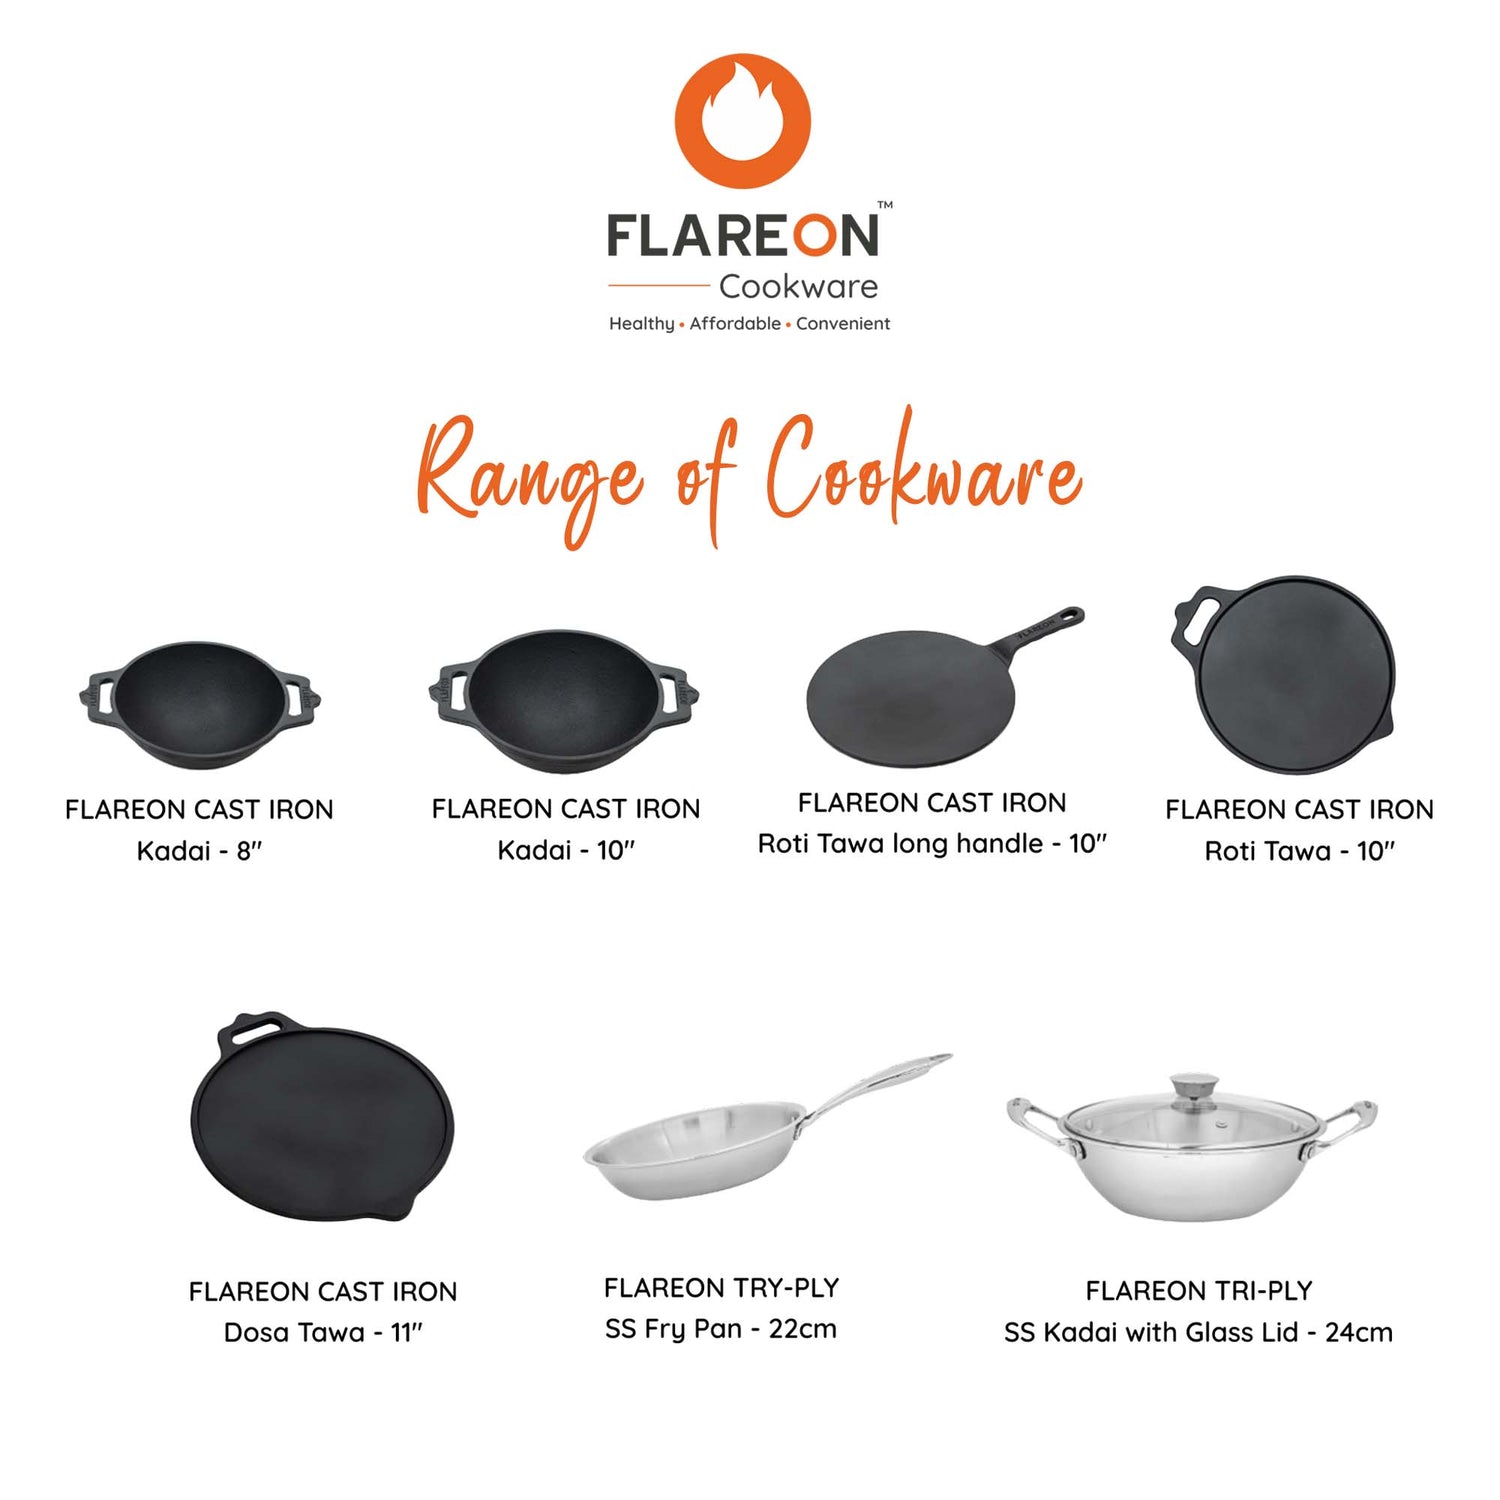 FlareOn's Range of Cookware